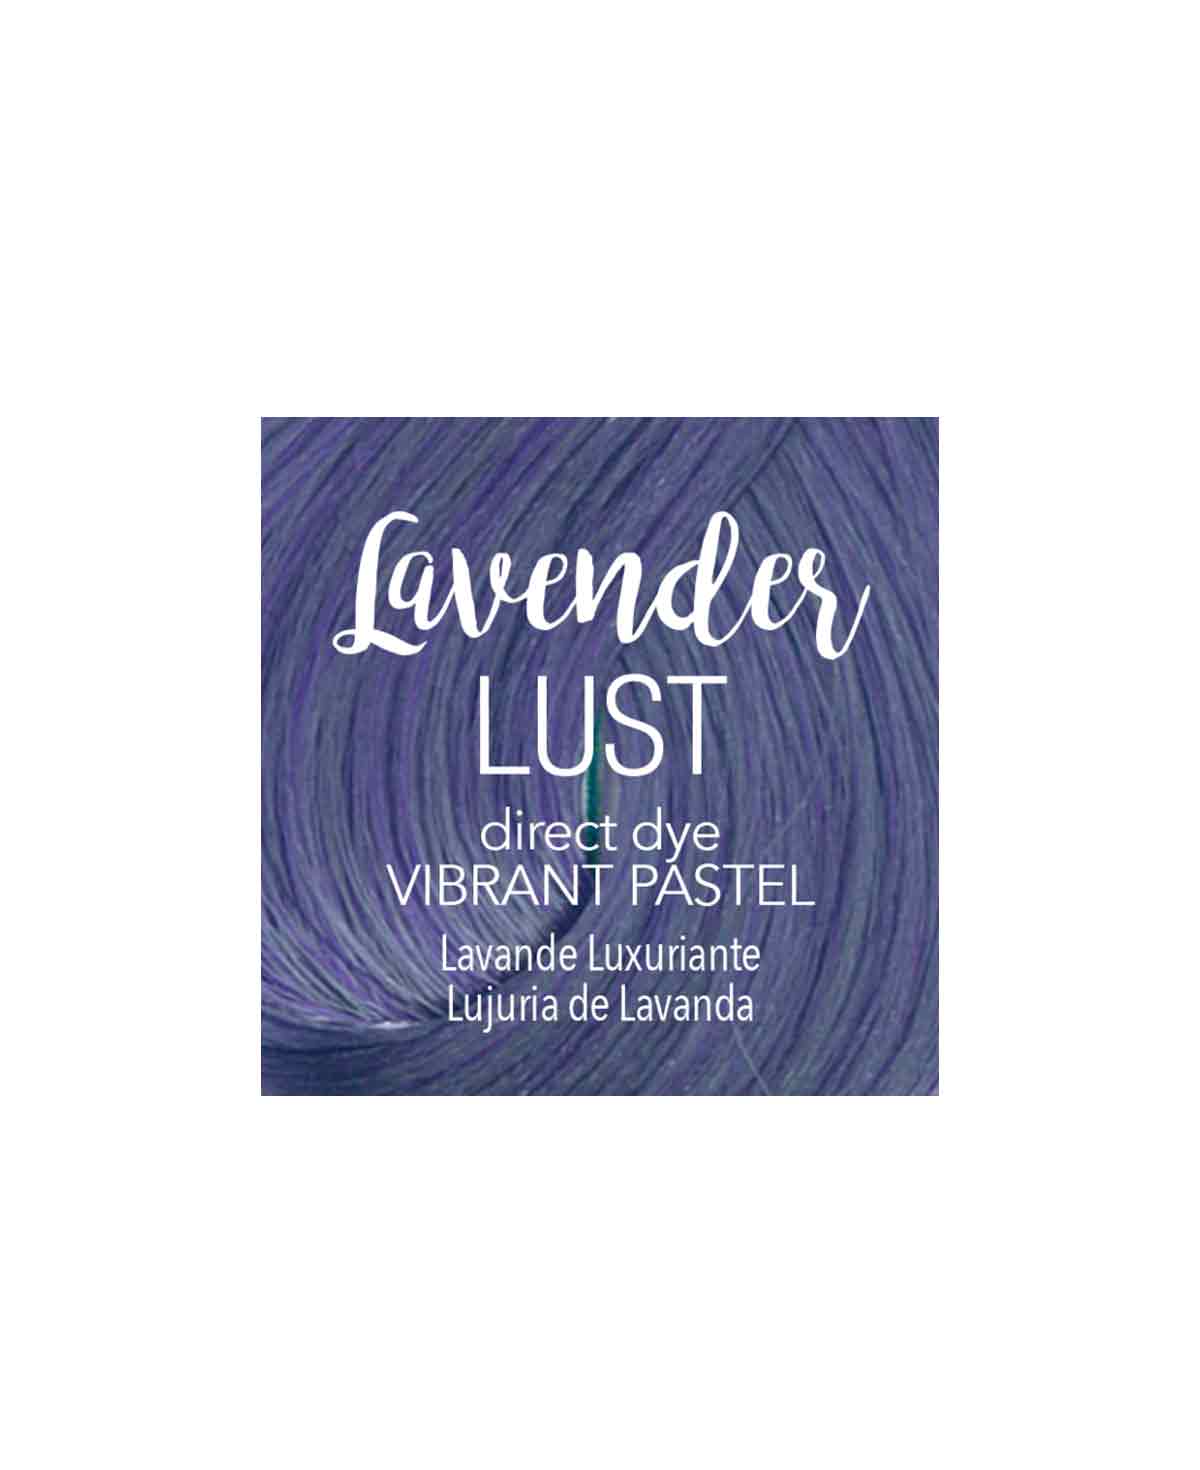 Mydentity - Lavender Lust 